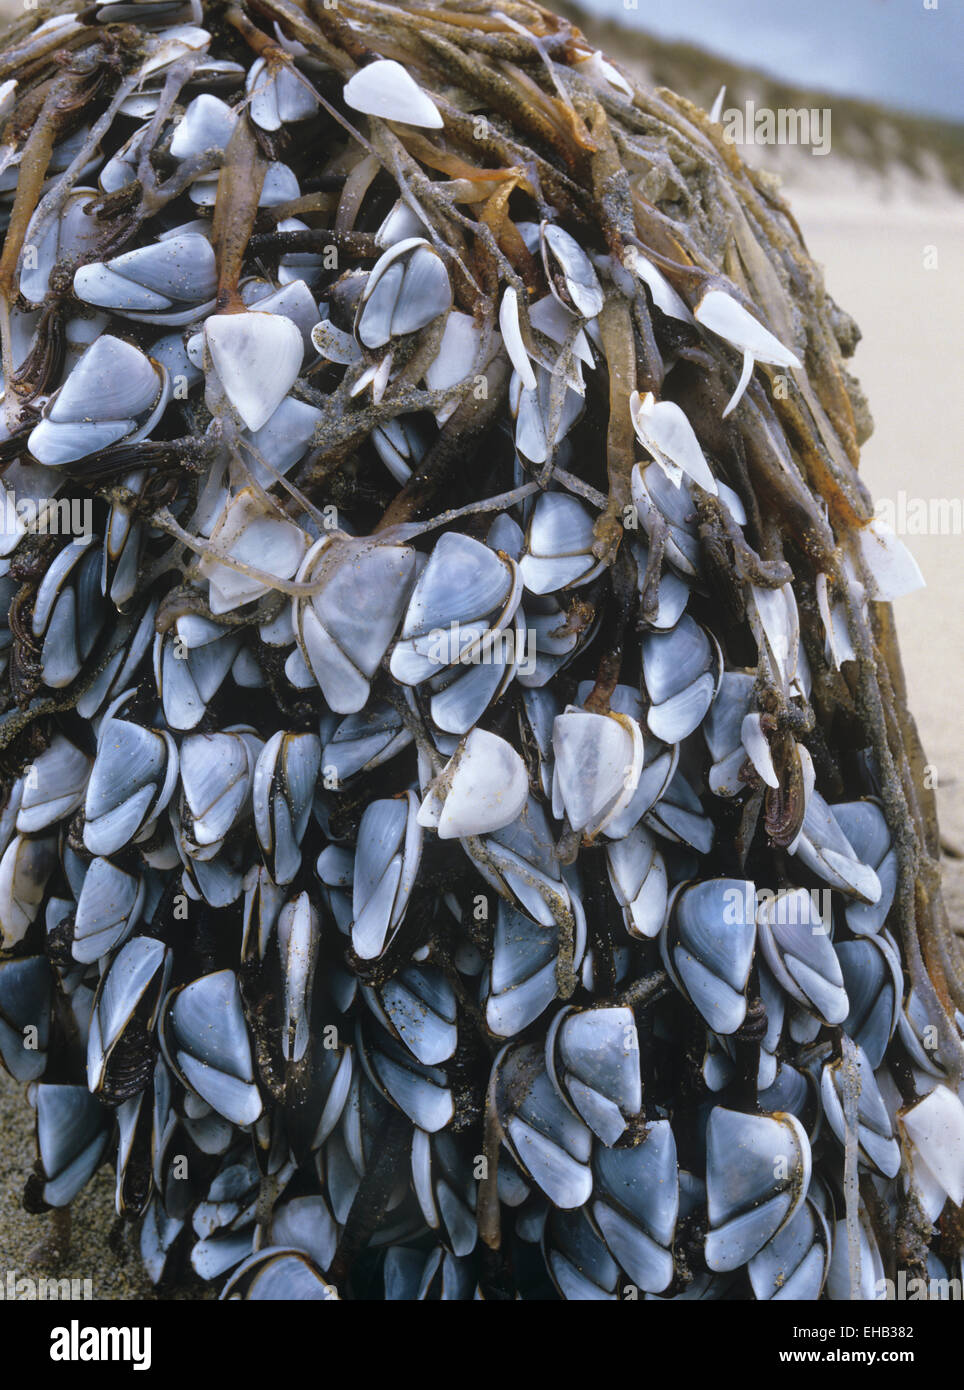 Common Goose Barnacle - Lepas anatifera Stock Photo